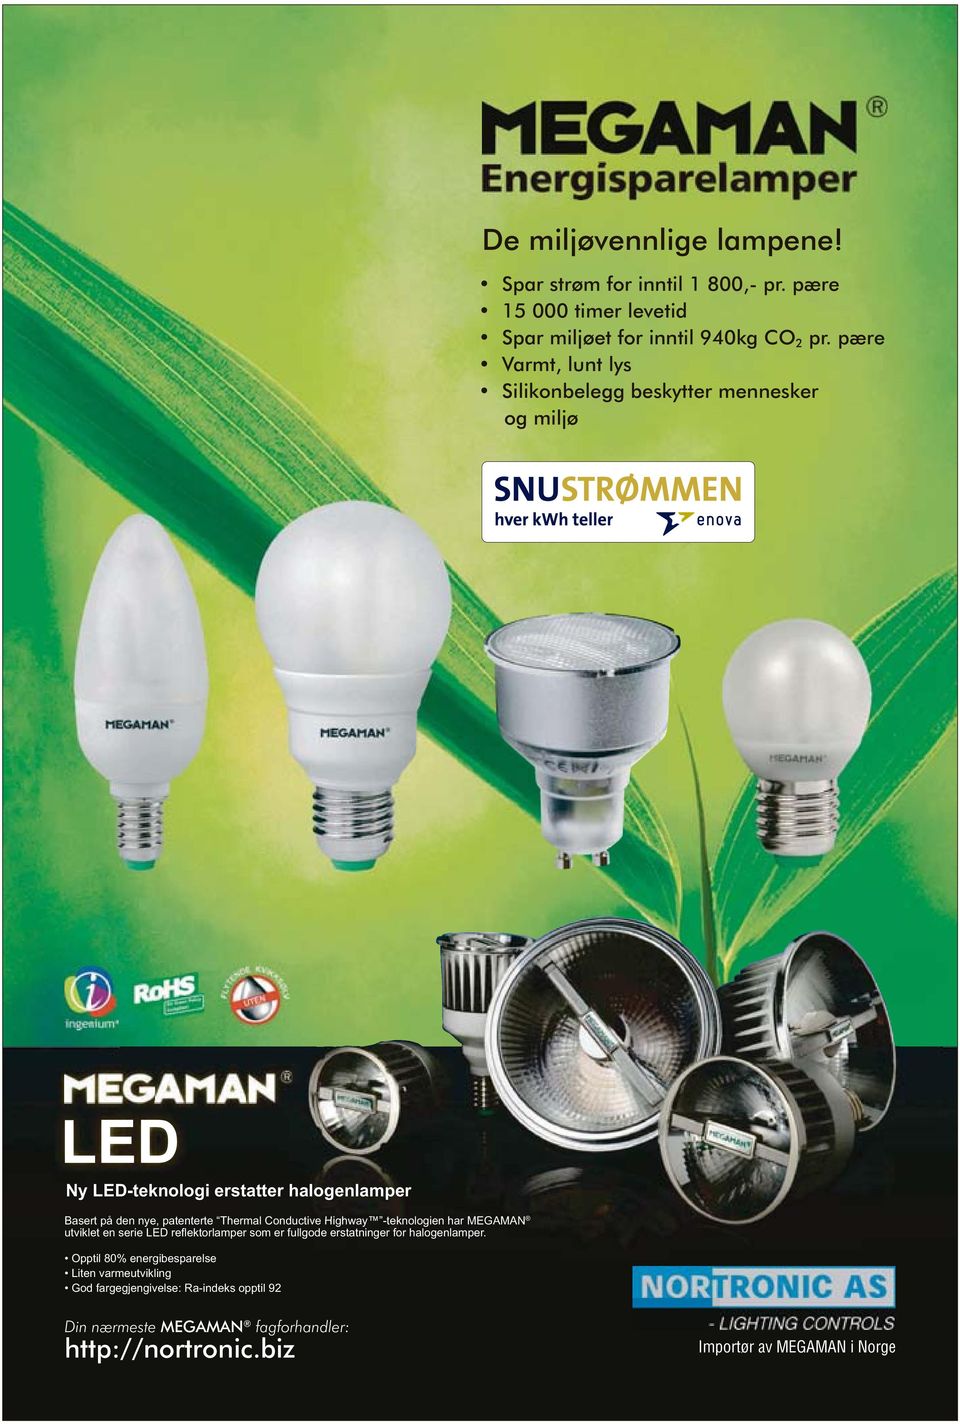 Thermal Conductive Highway -teknologien har MEGAMAN utviklet en serie LED refl ektorlamper som er fullgode erstatninger for halogenlamper.